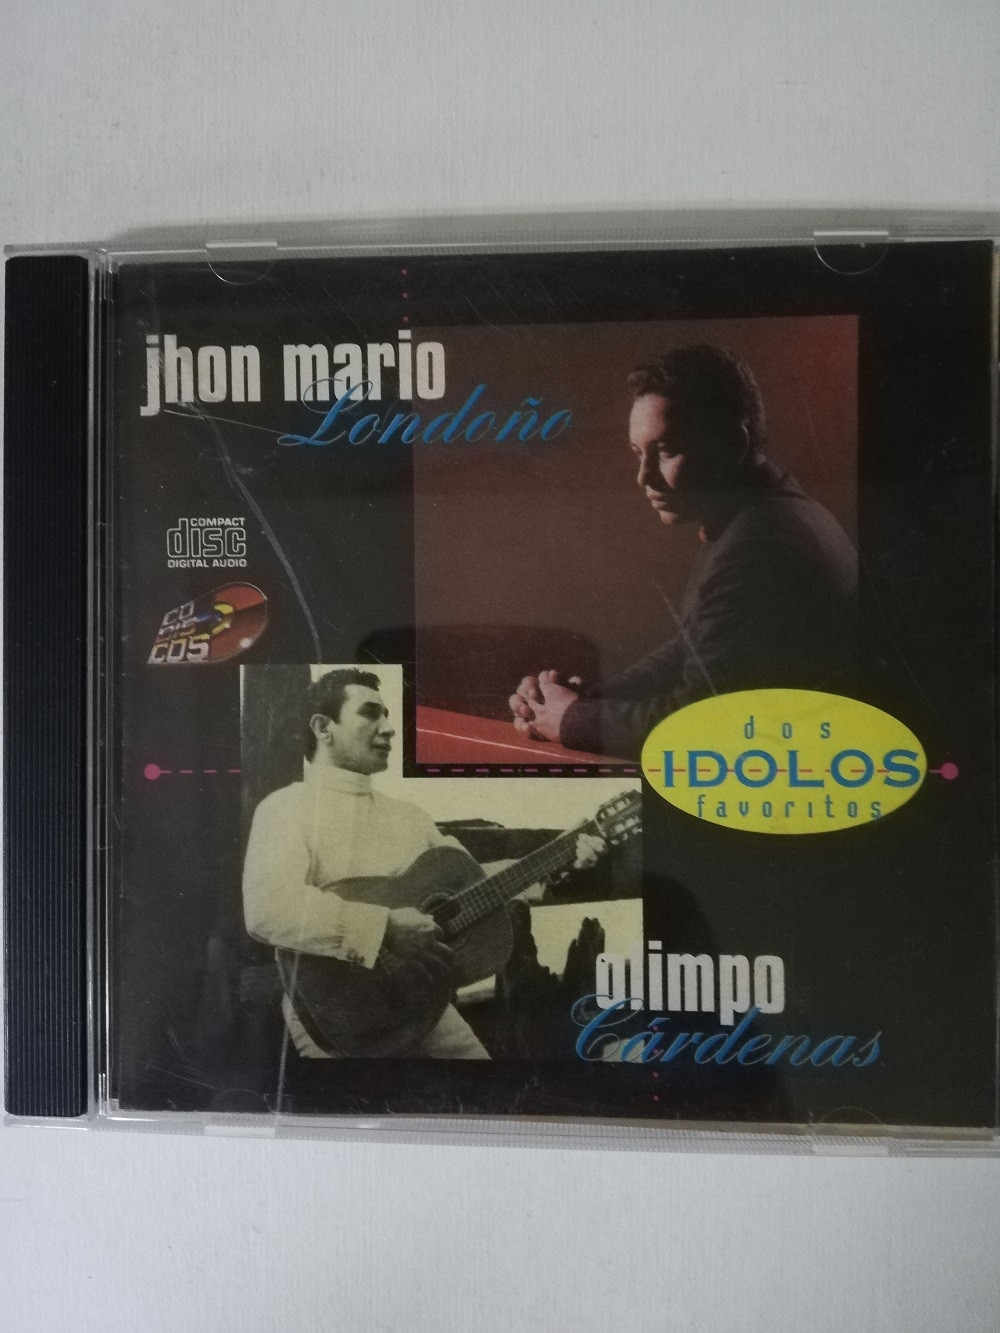 Imagen CD JHON MARIO LONDOÑO/OLIMPO CARDENAS - DOS IDOLOS FAVORITOS 1